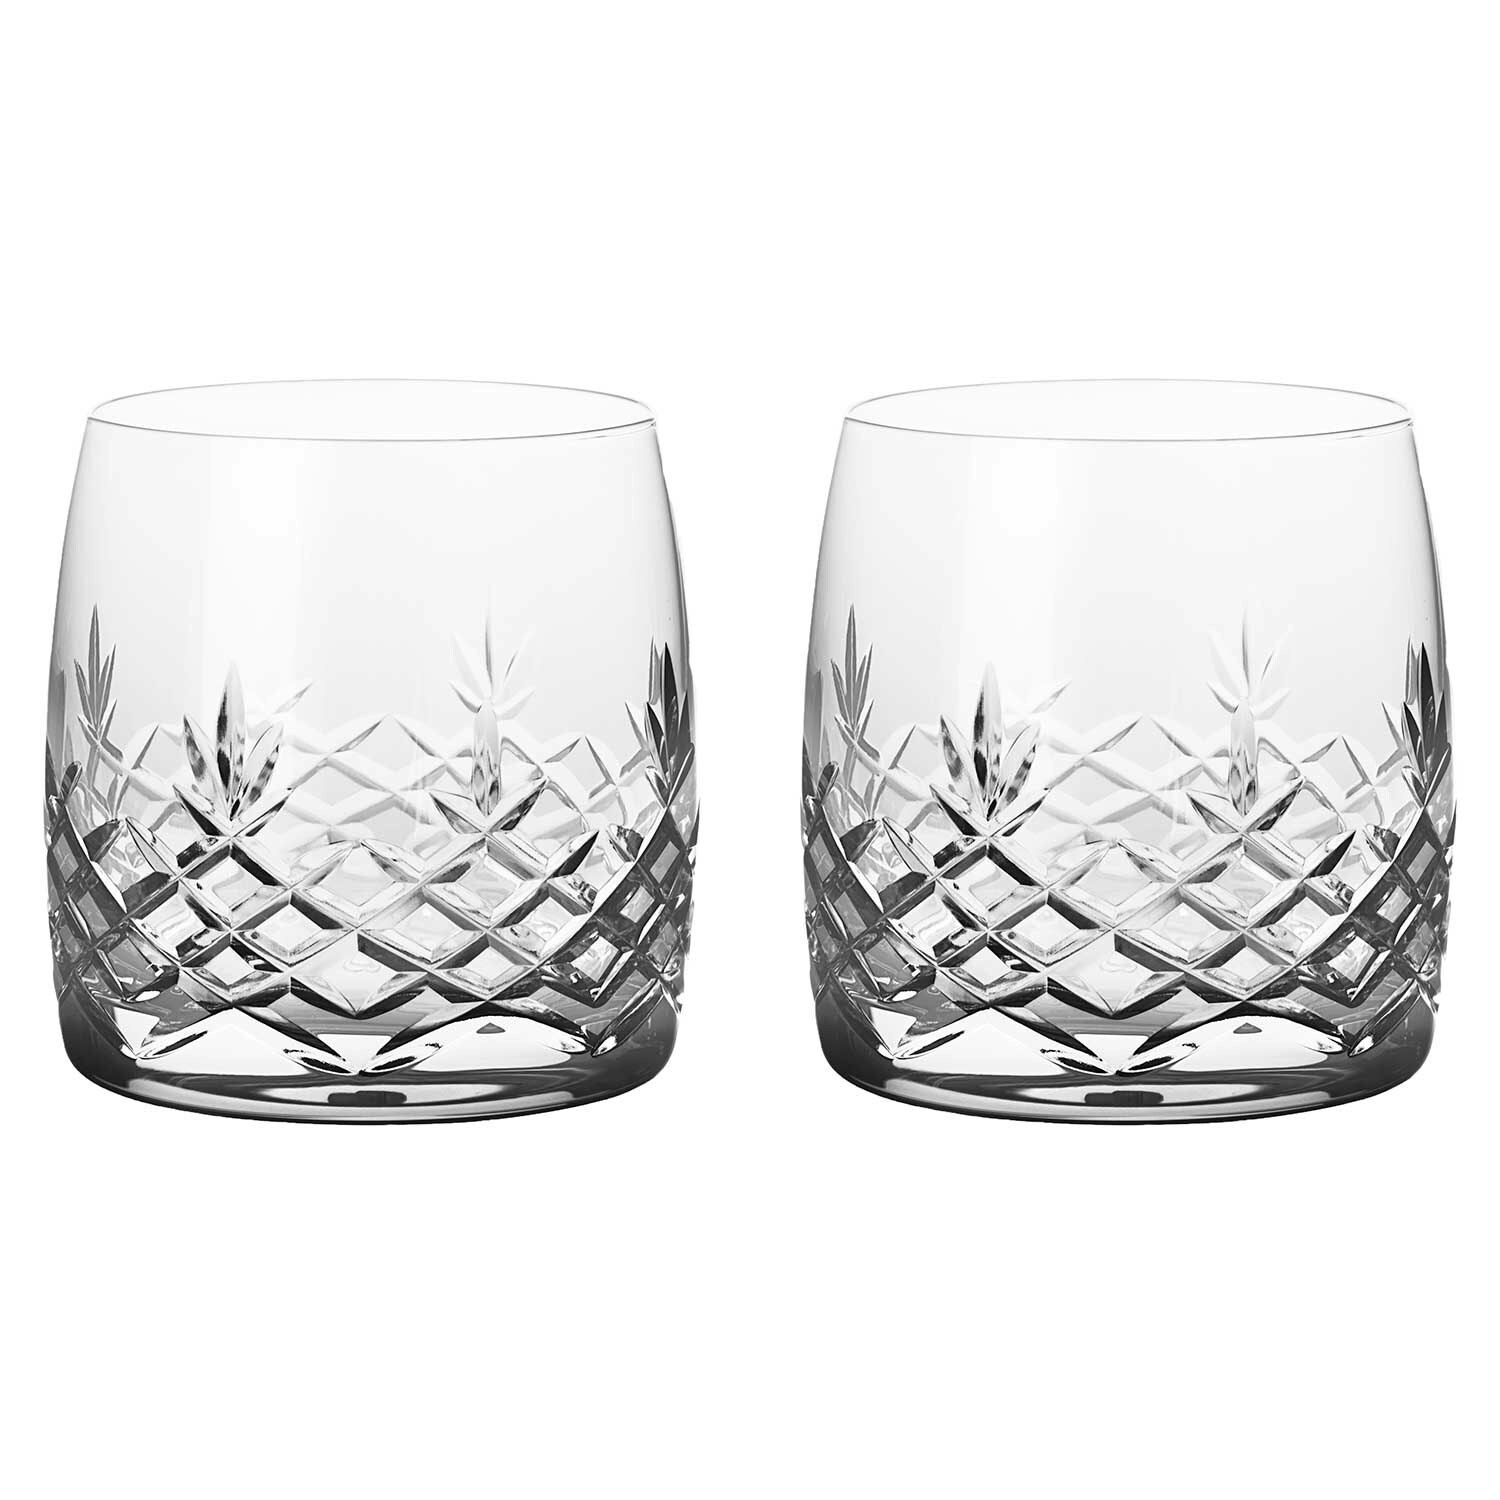 https://royaldesign.com/image/2/frederik-bagger-crispy-aqua-drinking-glass-2-pcs-0